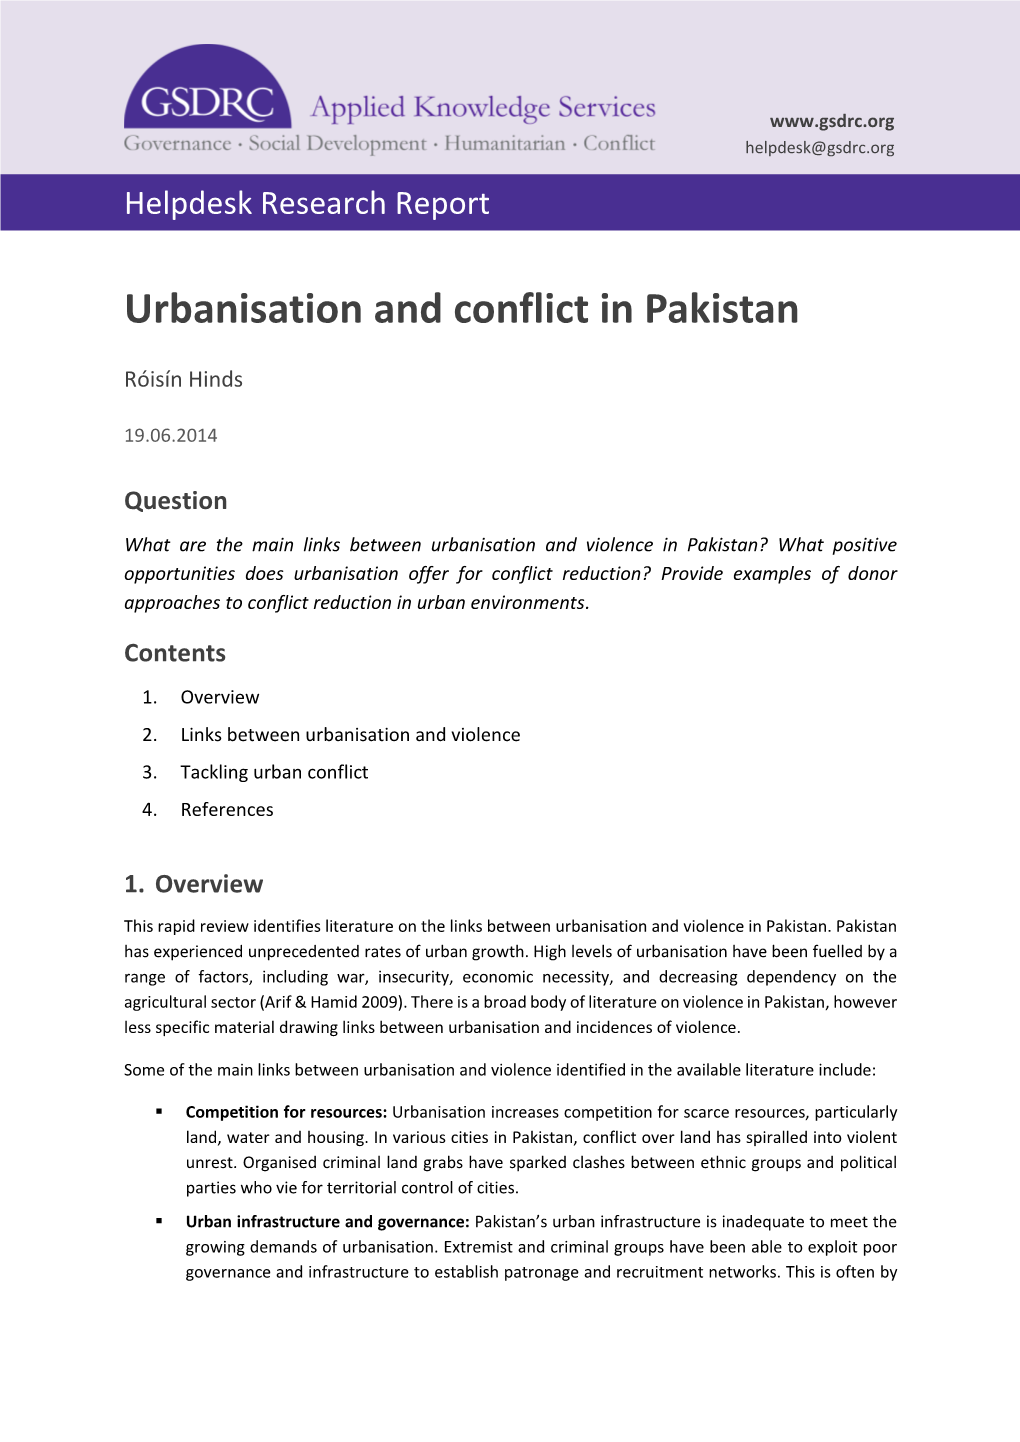 Urbanisation and Conflict in Pakistan